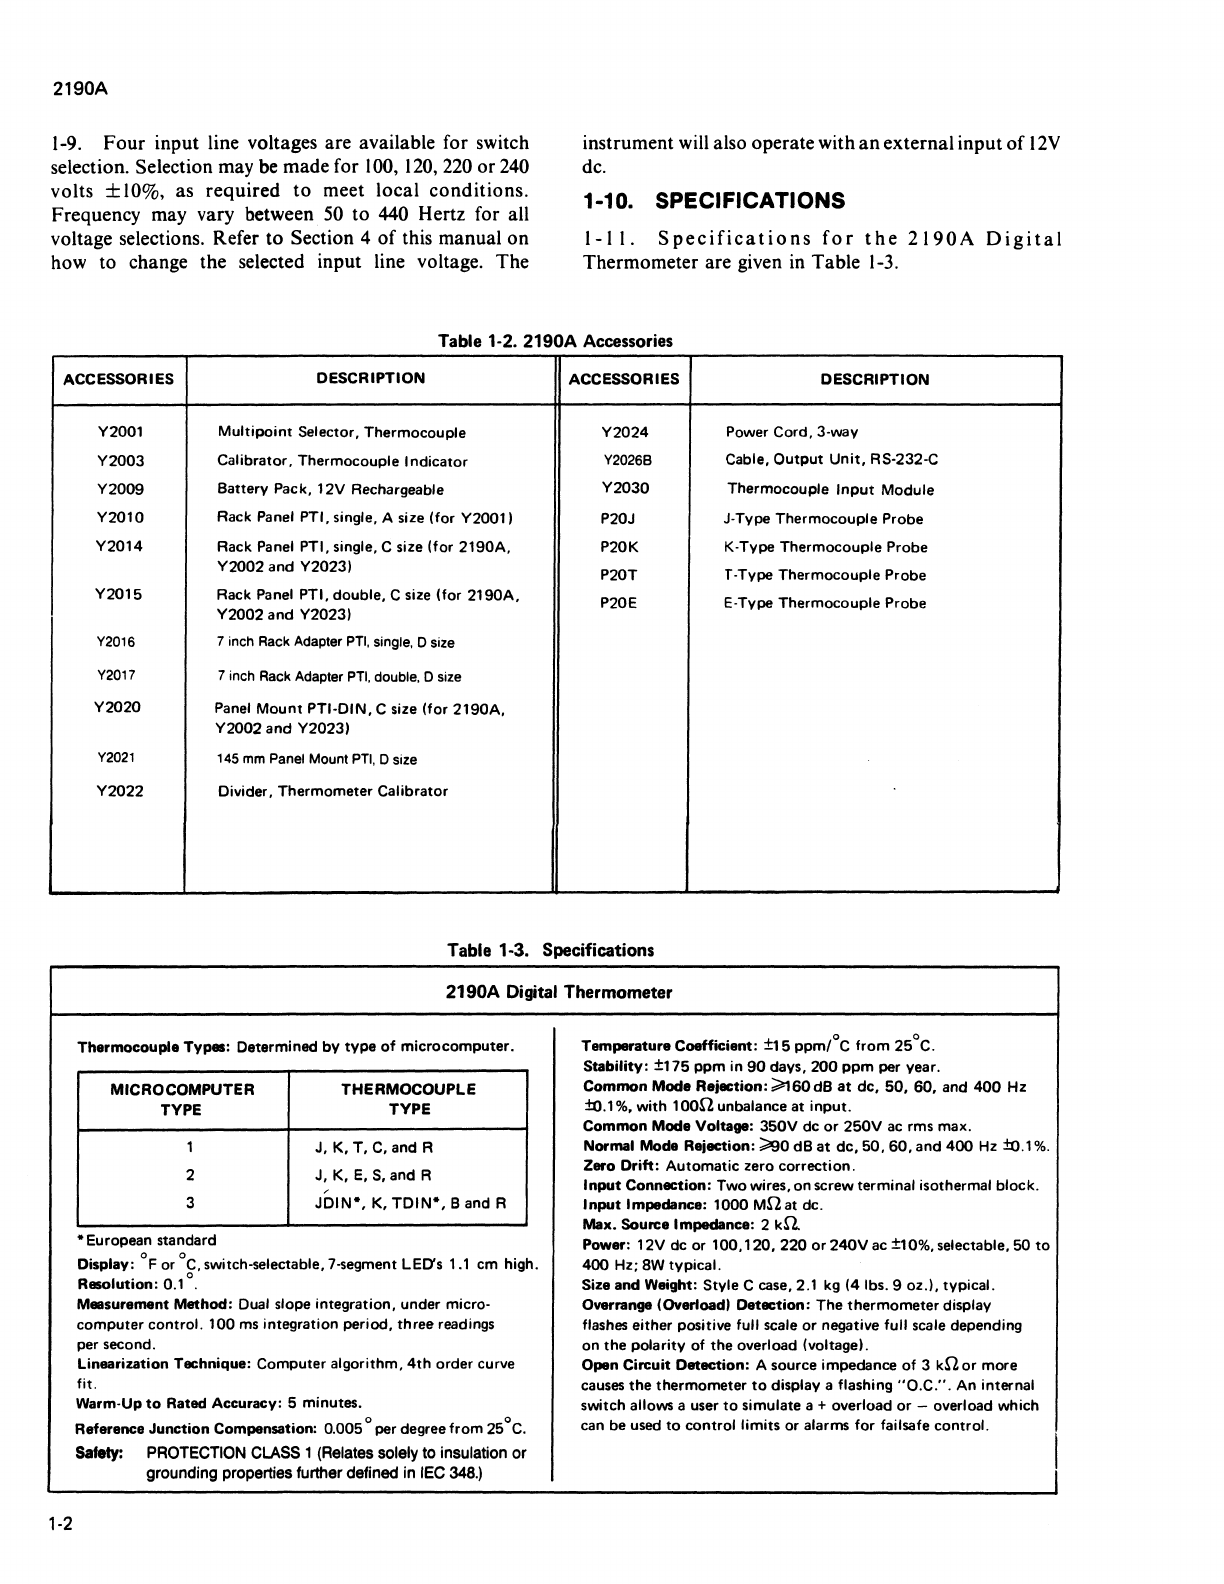 FLUKE 2190A DIGITAL THERMOMETER INSTRUCTION MANUAL 